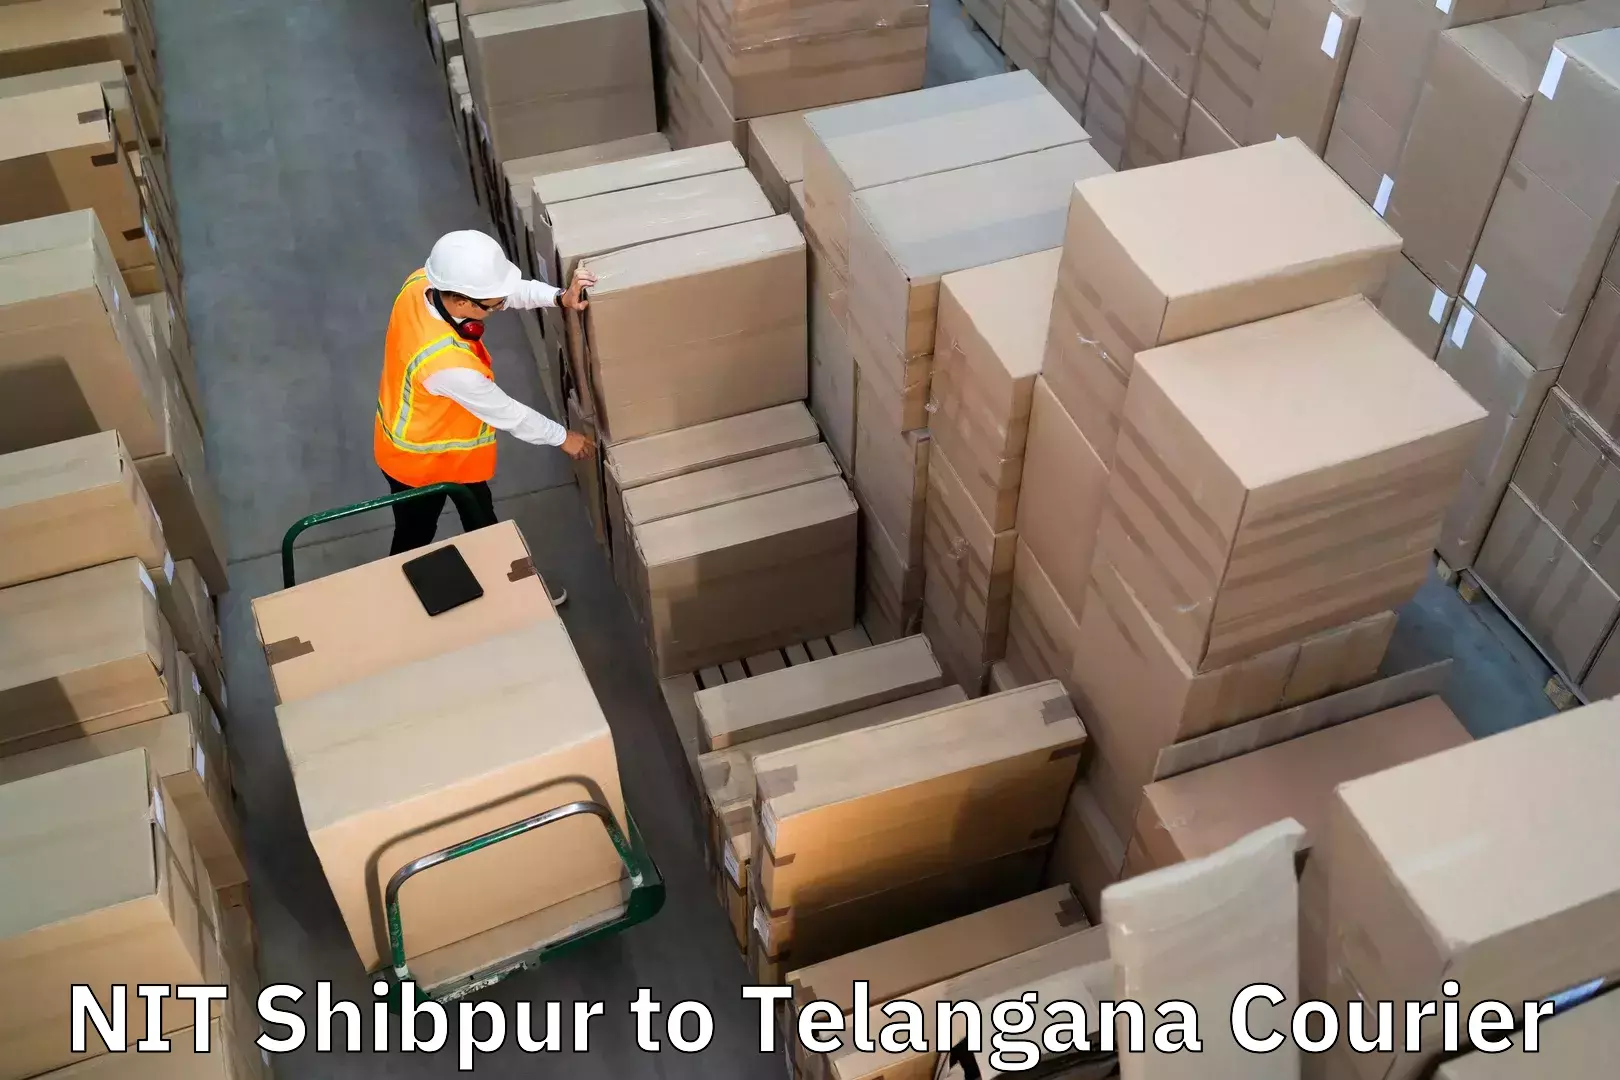 Luggage delivery app NIT Shibpur to Nalgonda